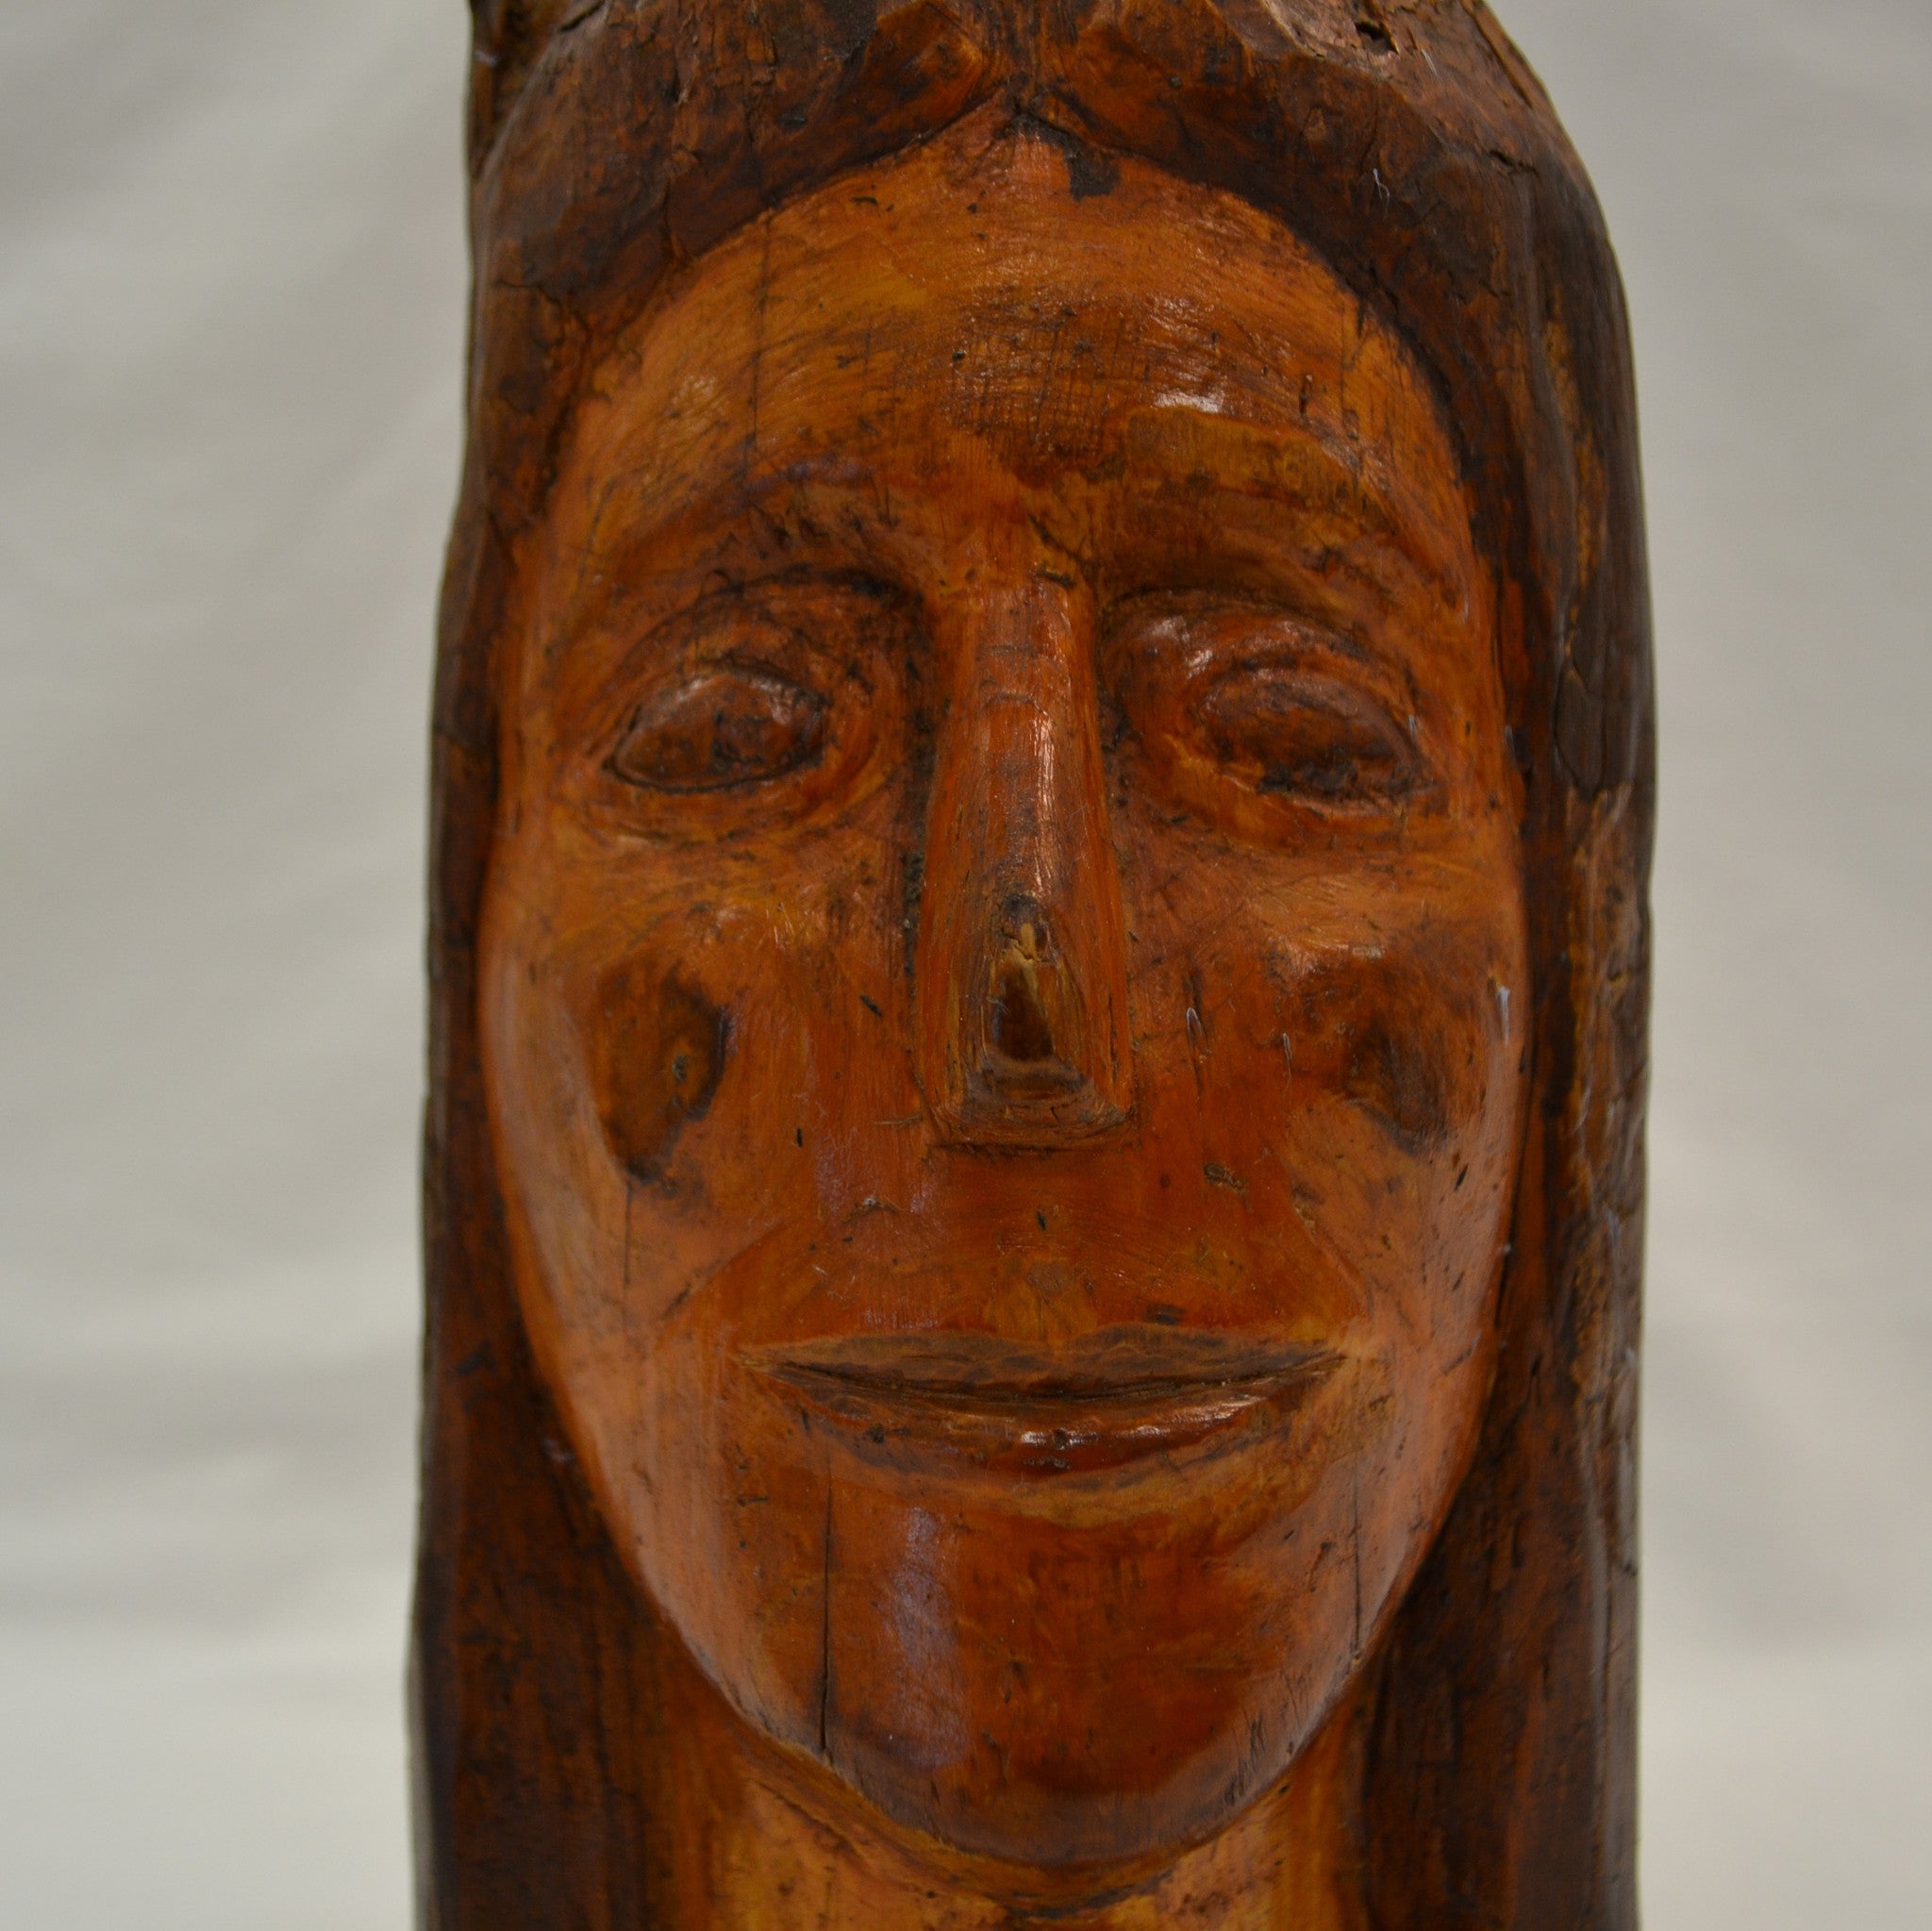 Indian face carved in branch folk art